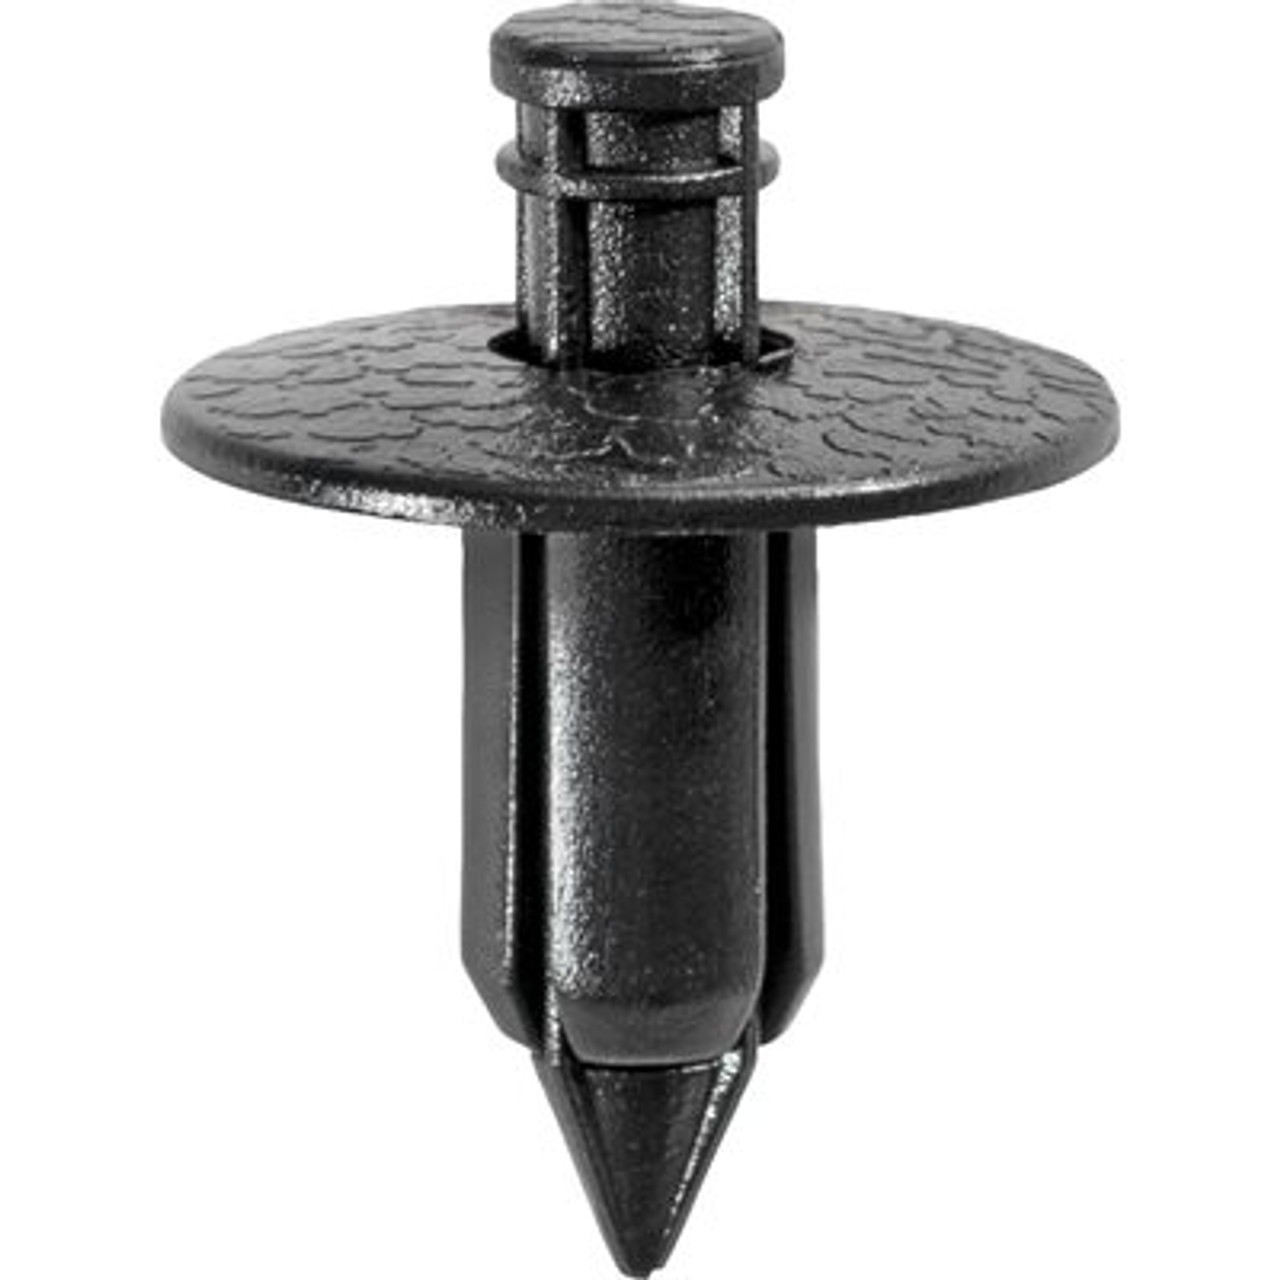 Push Pin Clip / Push Rivet / Retaining Clip (Nissan, Infiniti) by